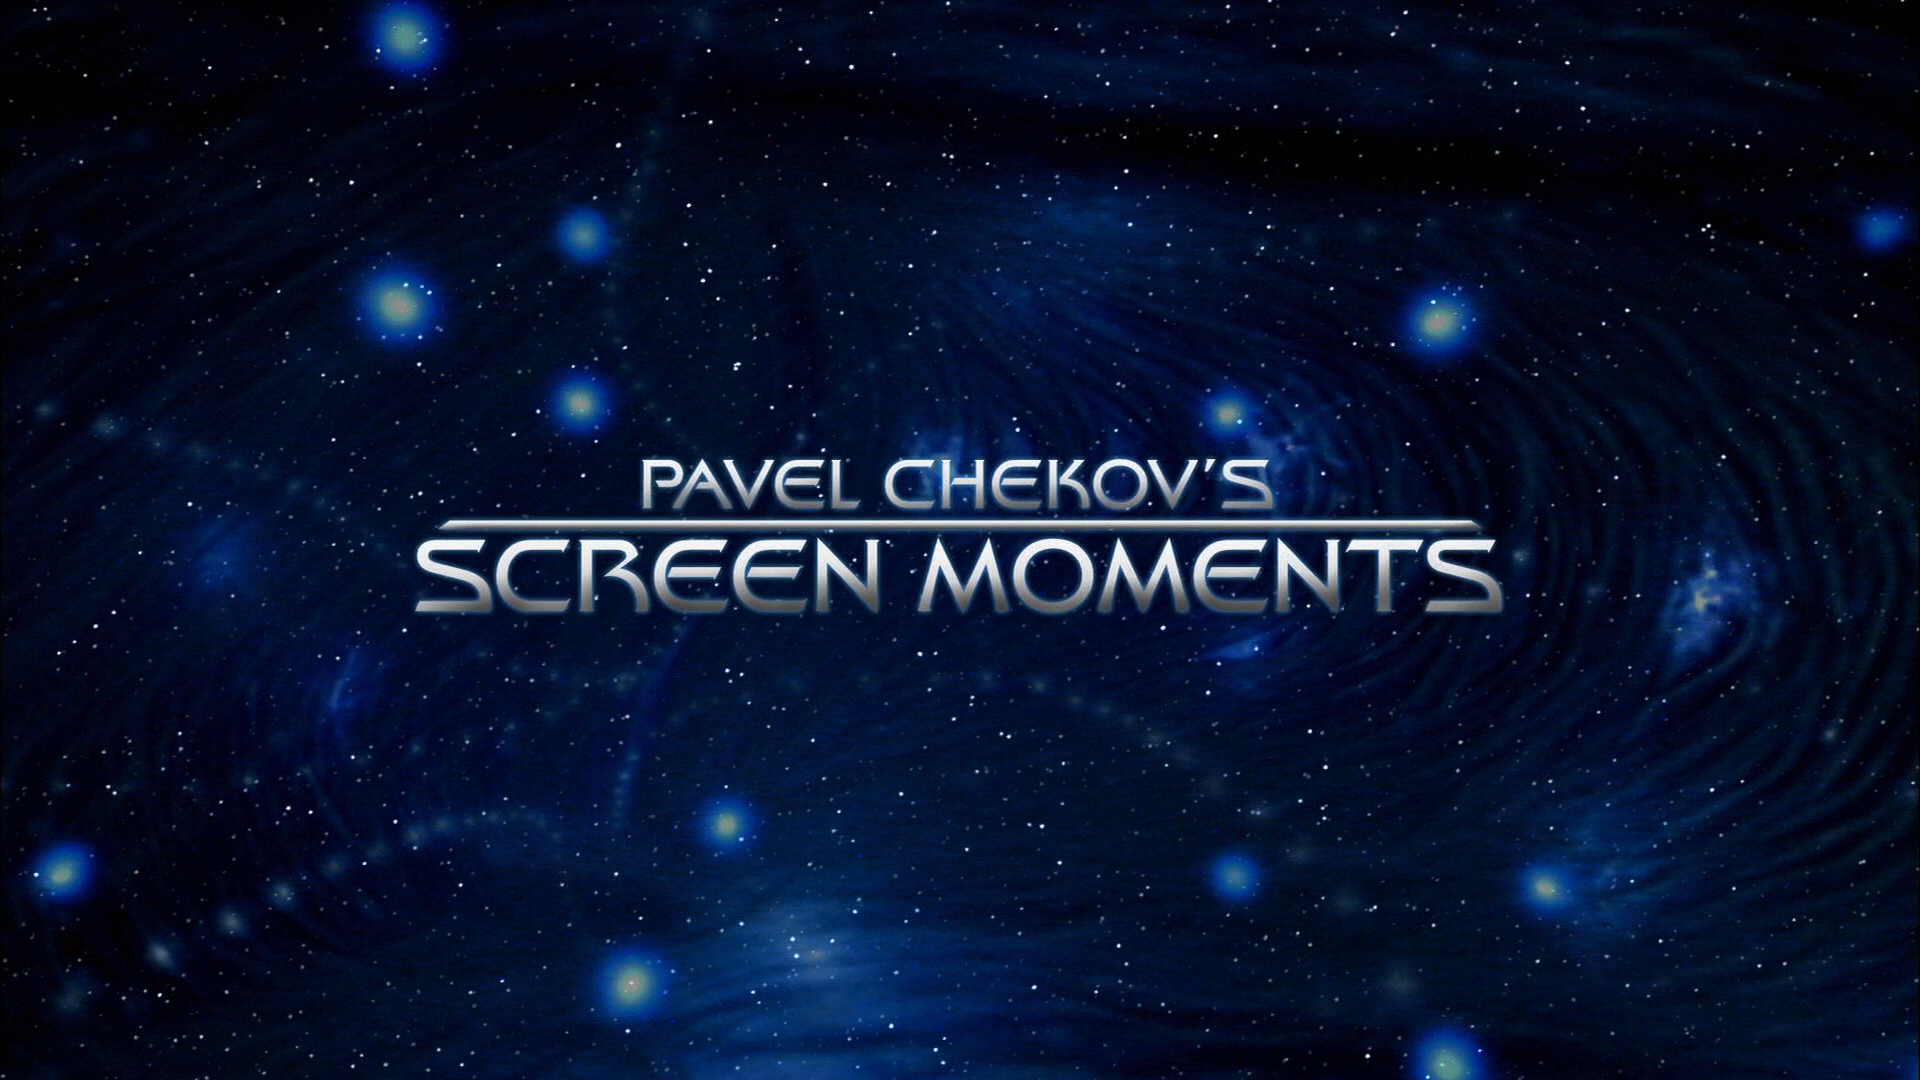 "Pavel Chekov’s Screen Moments" featurette